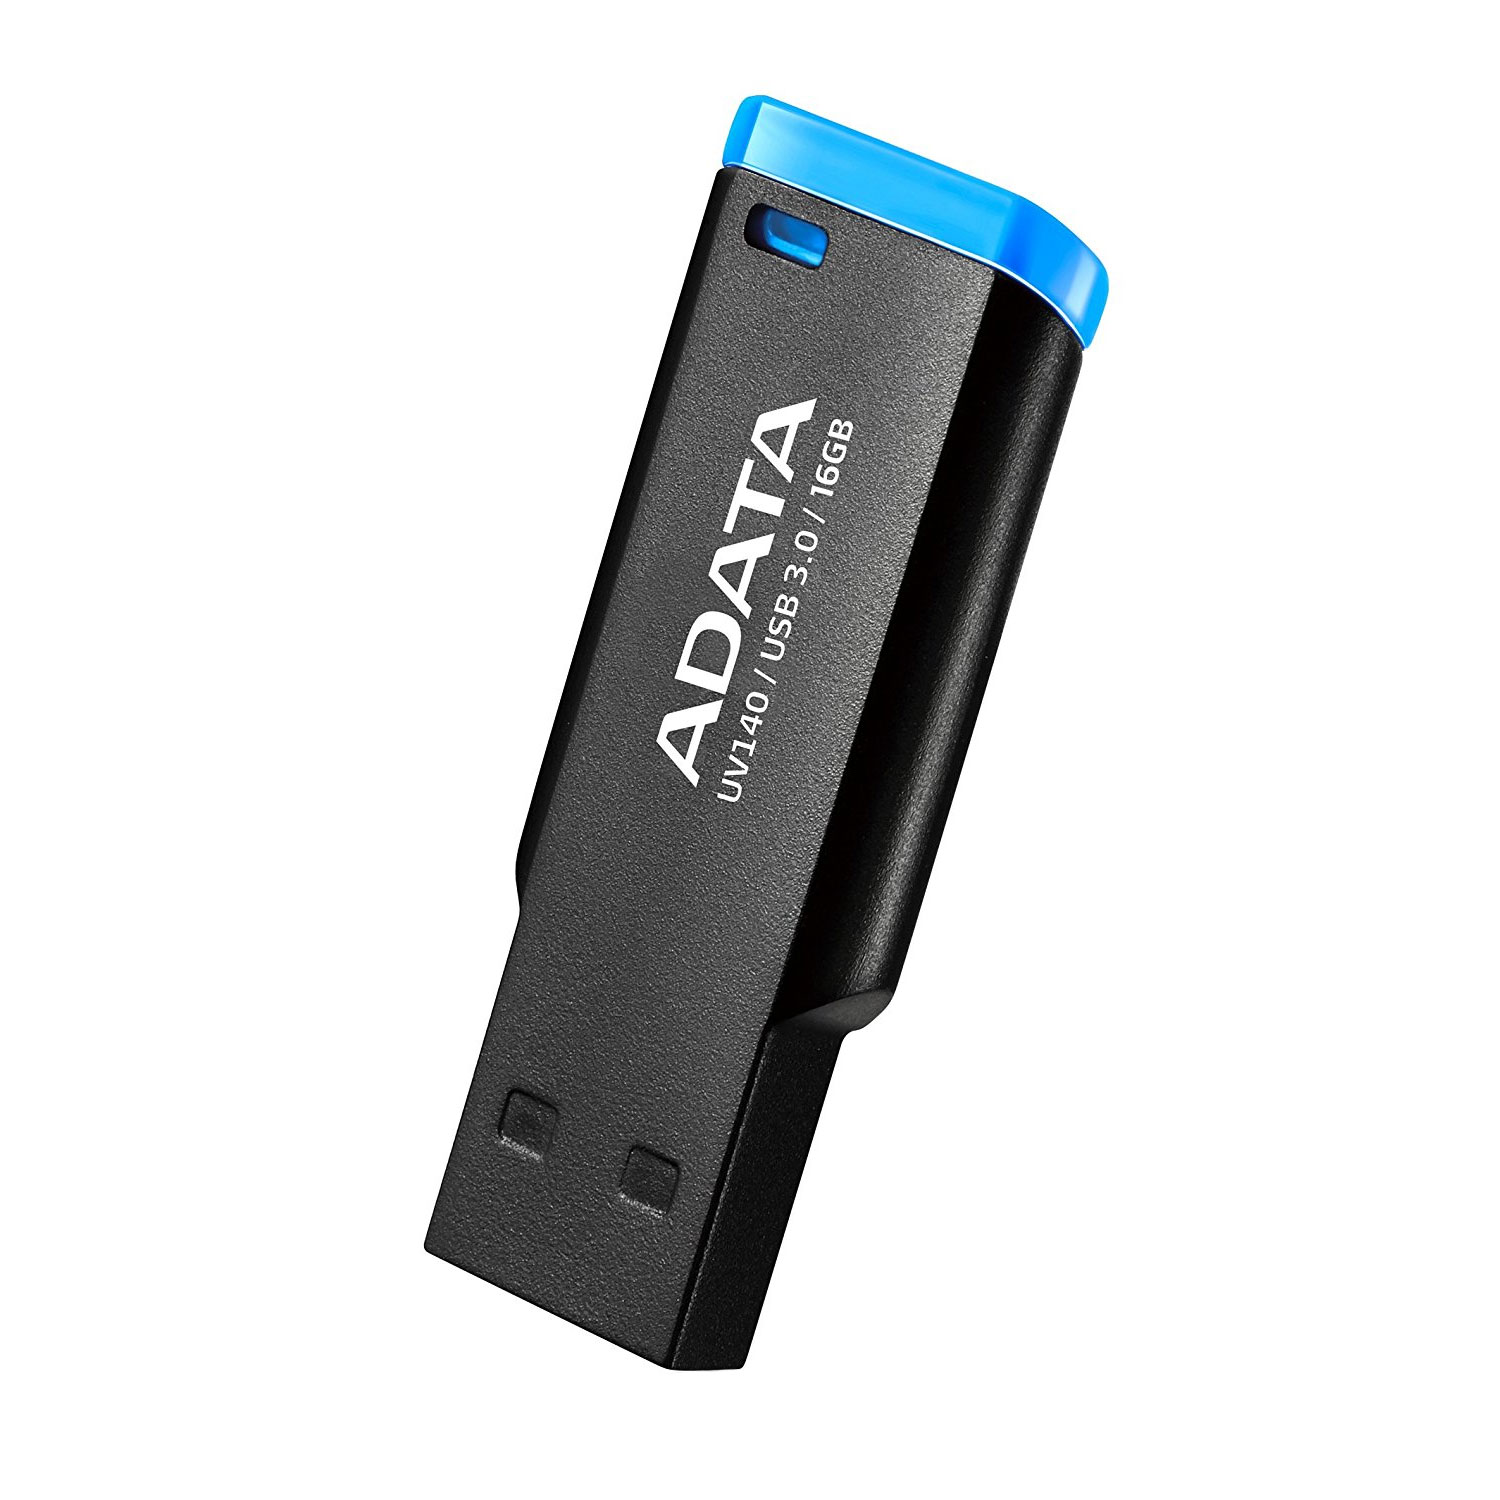  Memorie USB A-DATA AUV140-16G-RBE, 16GB, USB 3.0, Negru 